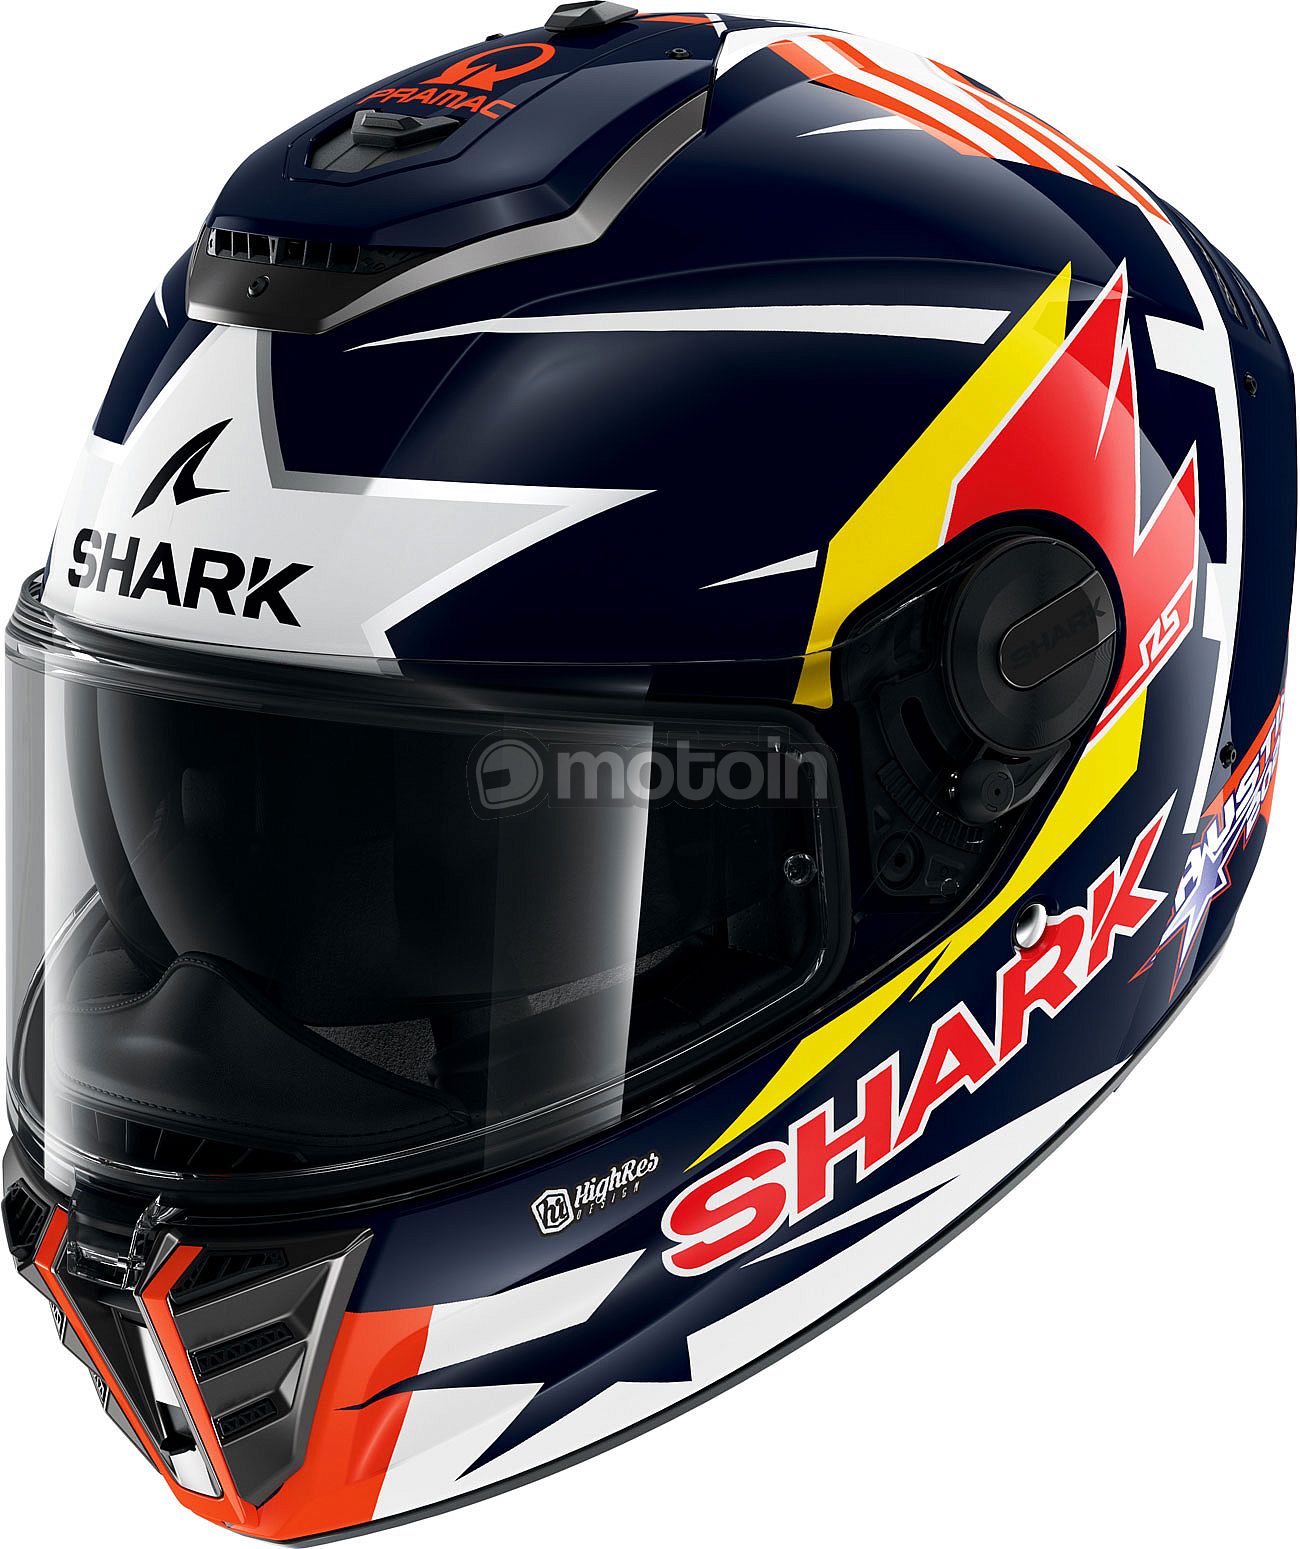 Shark Spartan RS Replica Zarco Austin, full face helmet